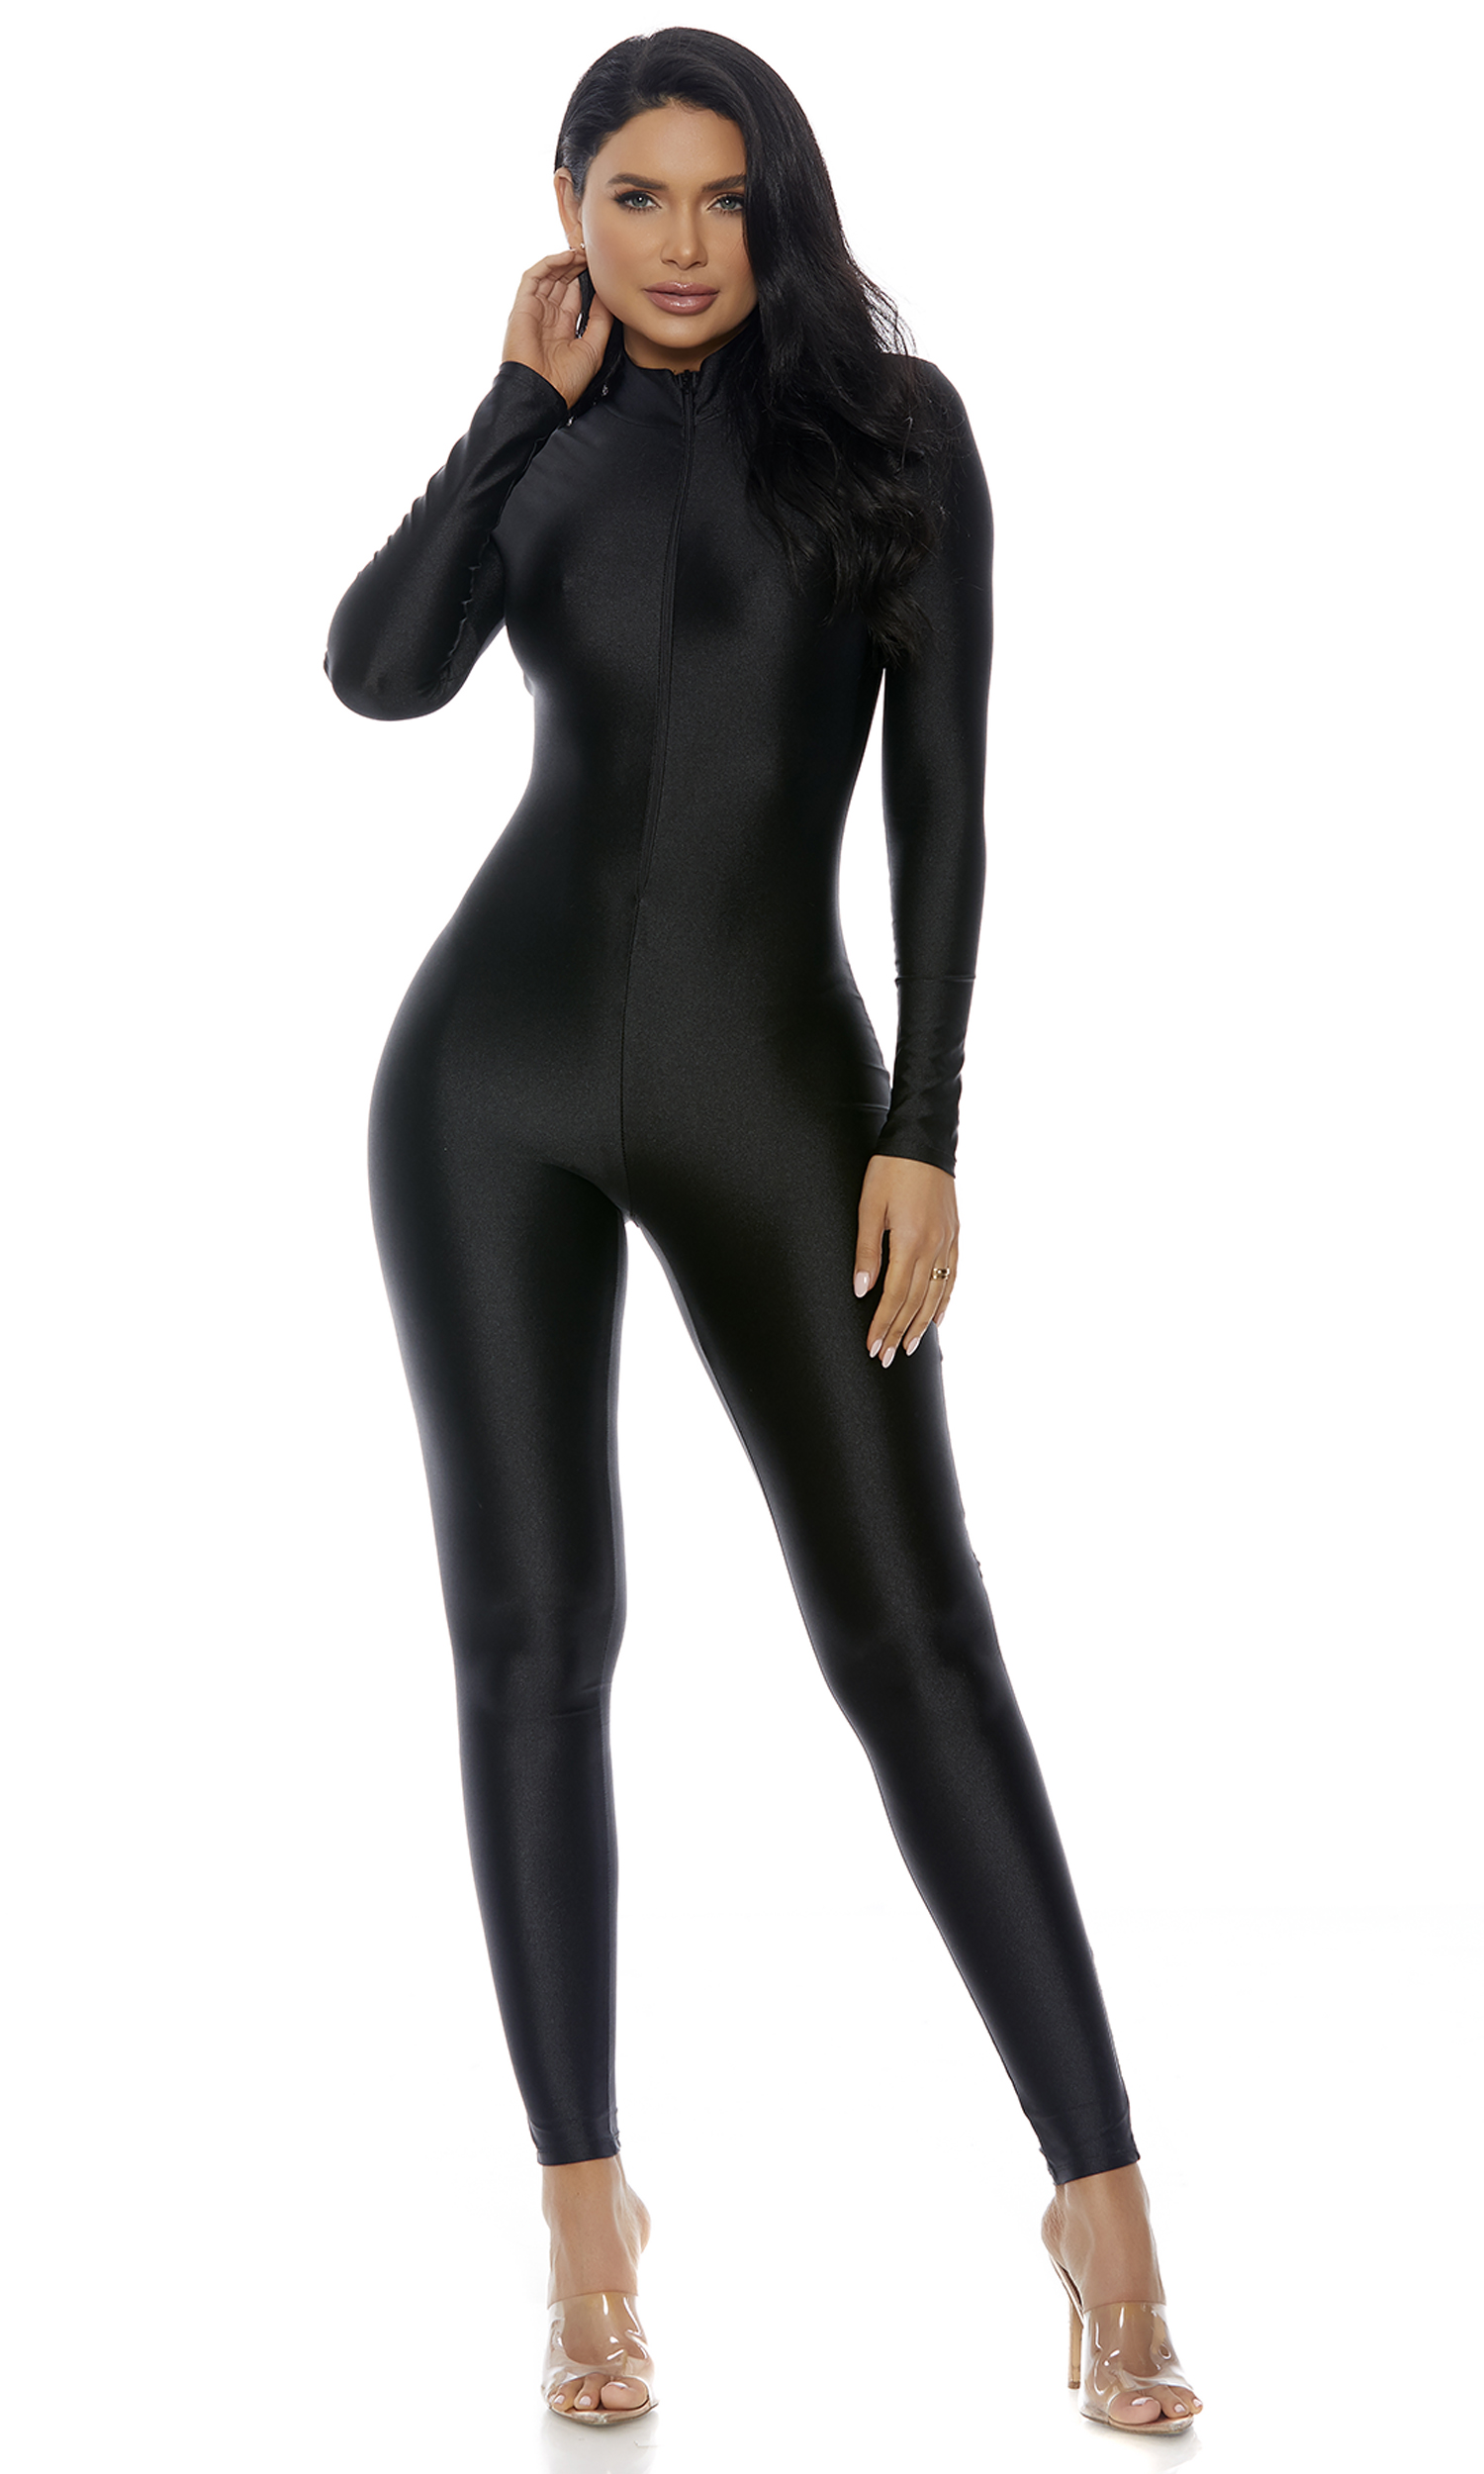 Full Black Bodysuit Costume Online Sale Up To 58 Off 